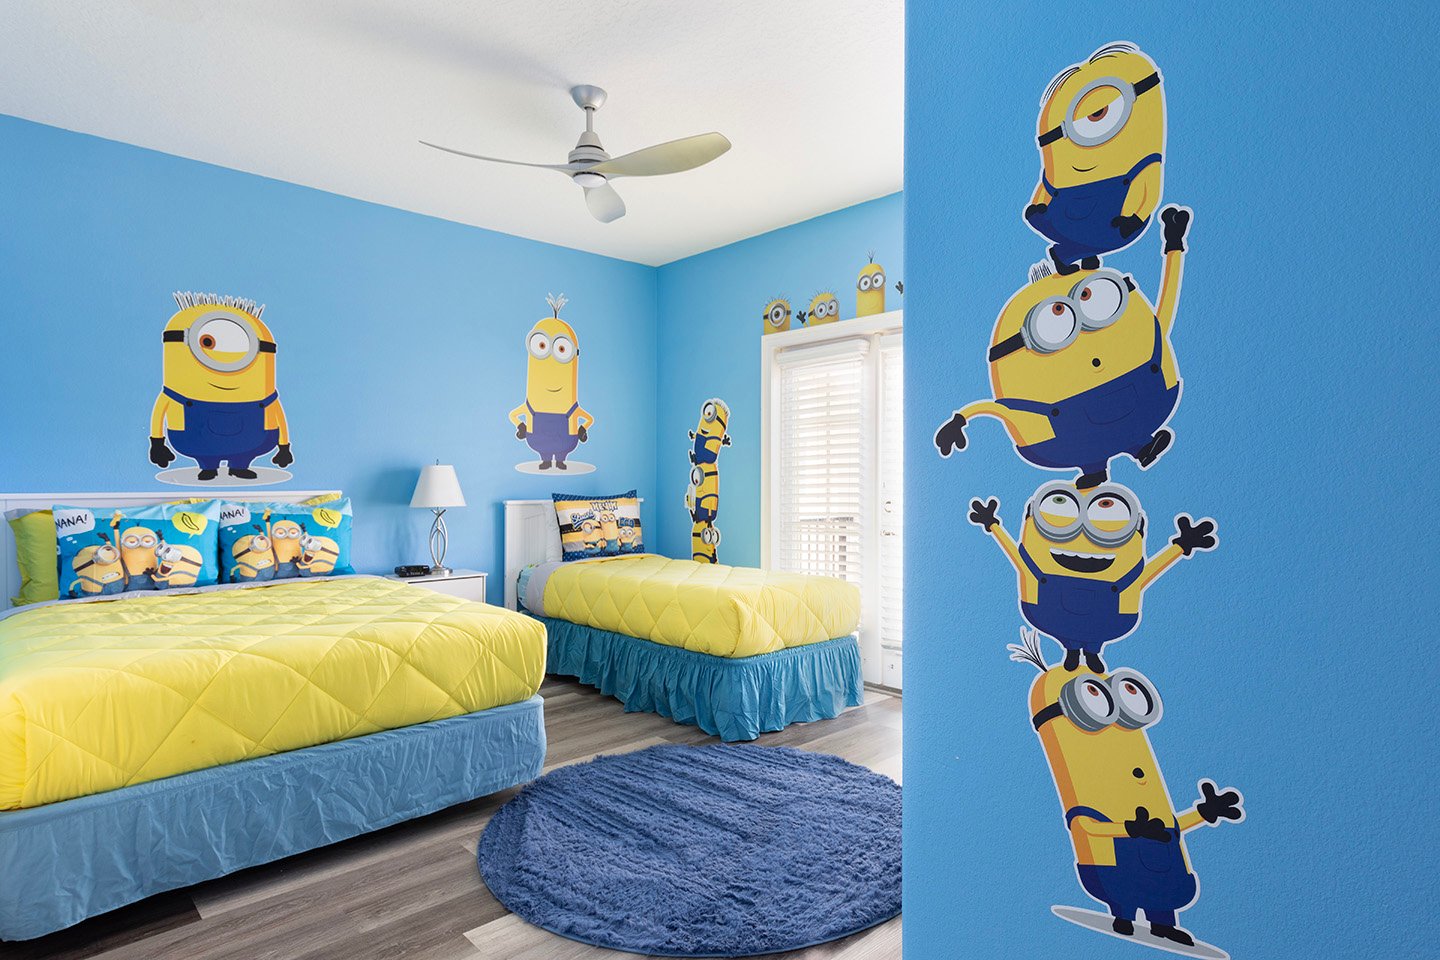 [amenities:themed-bedroom:2] Themed Bedroom